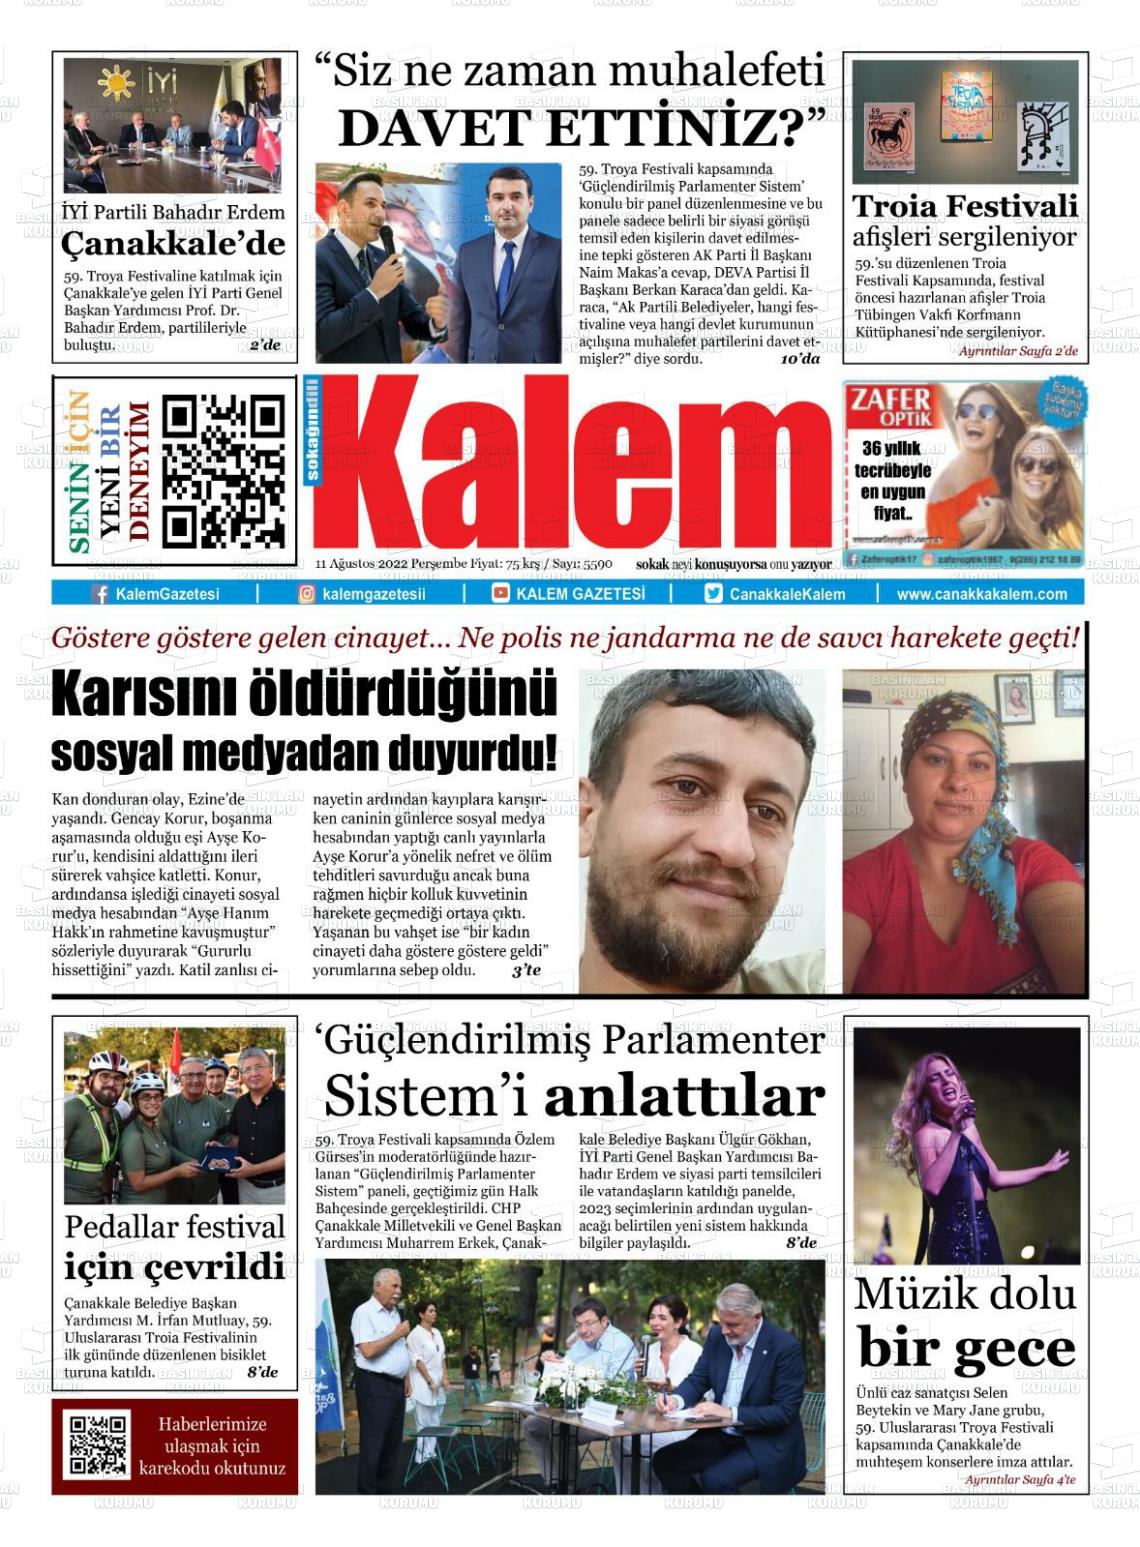 11 Ağustos 2022 Çanakkale Kalem Gazete Manşeti